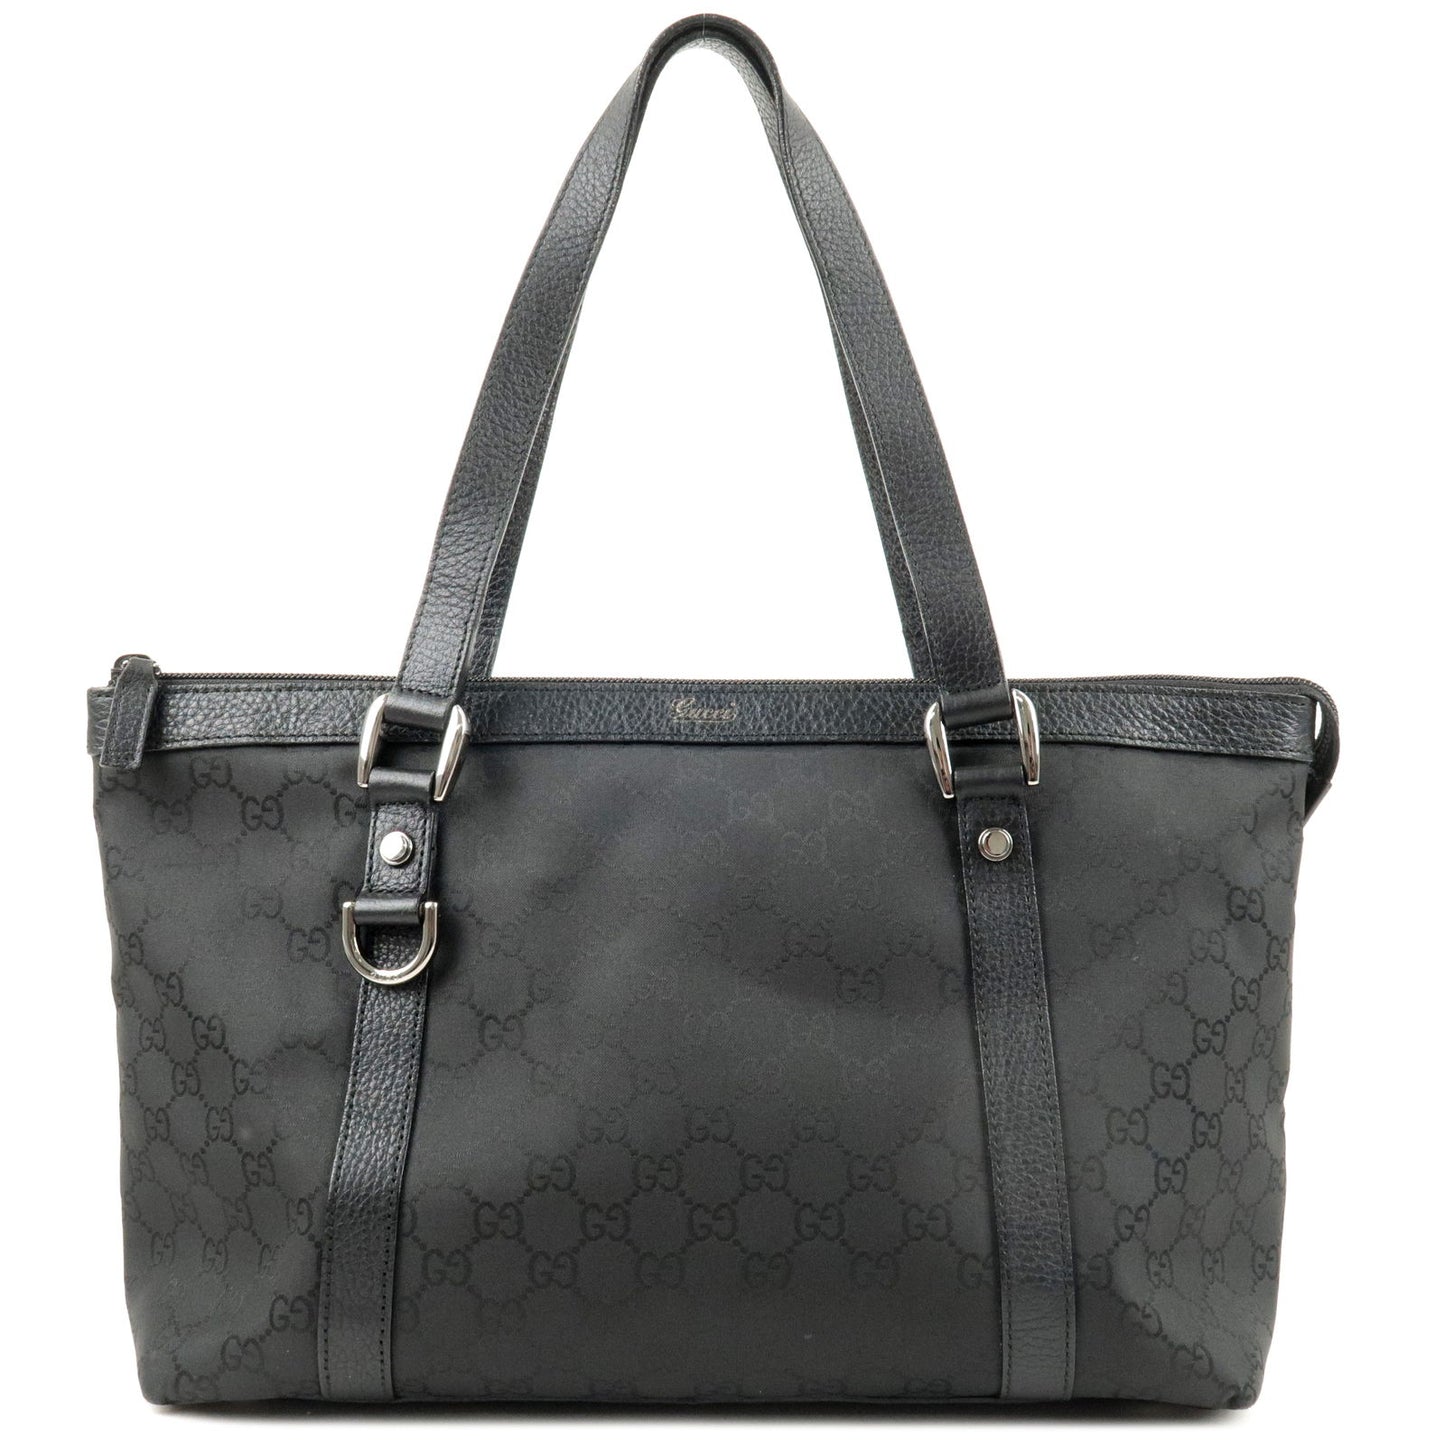 GUCCI-GG-Nylon-Leather-Tote-Bag-Hand-Bag-Black-268640